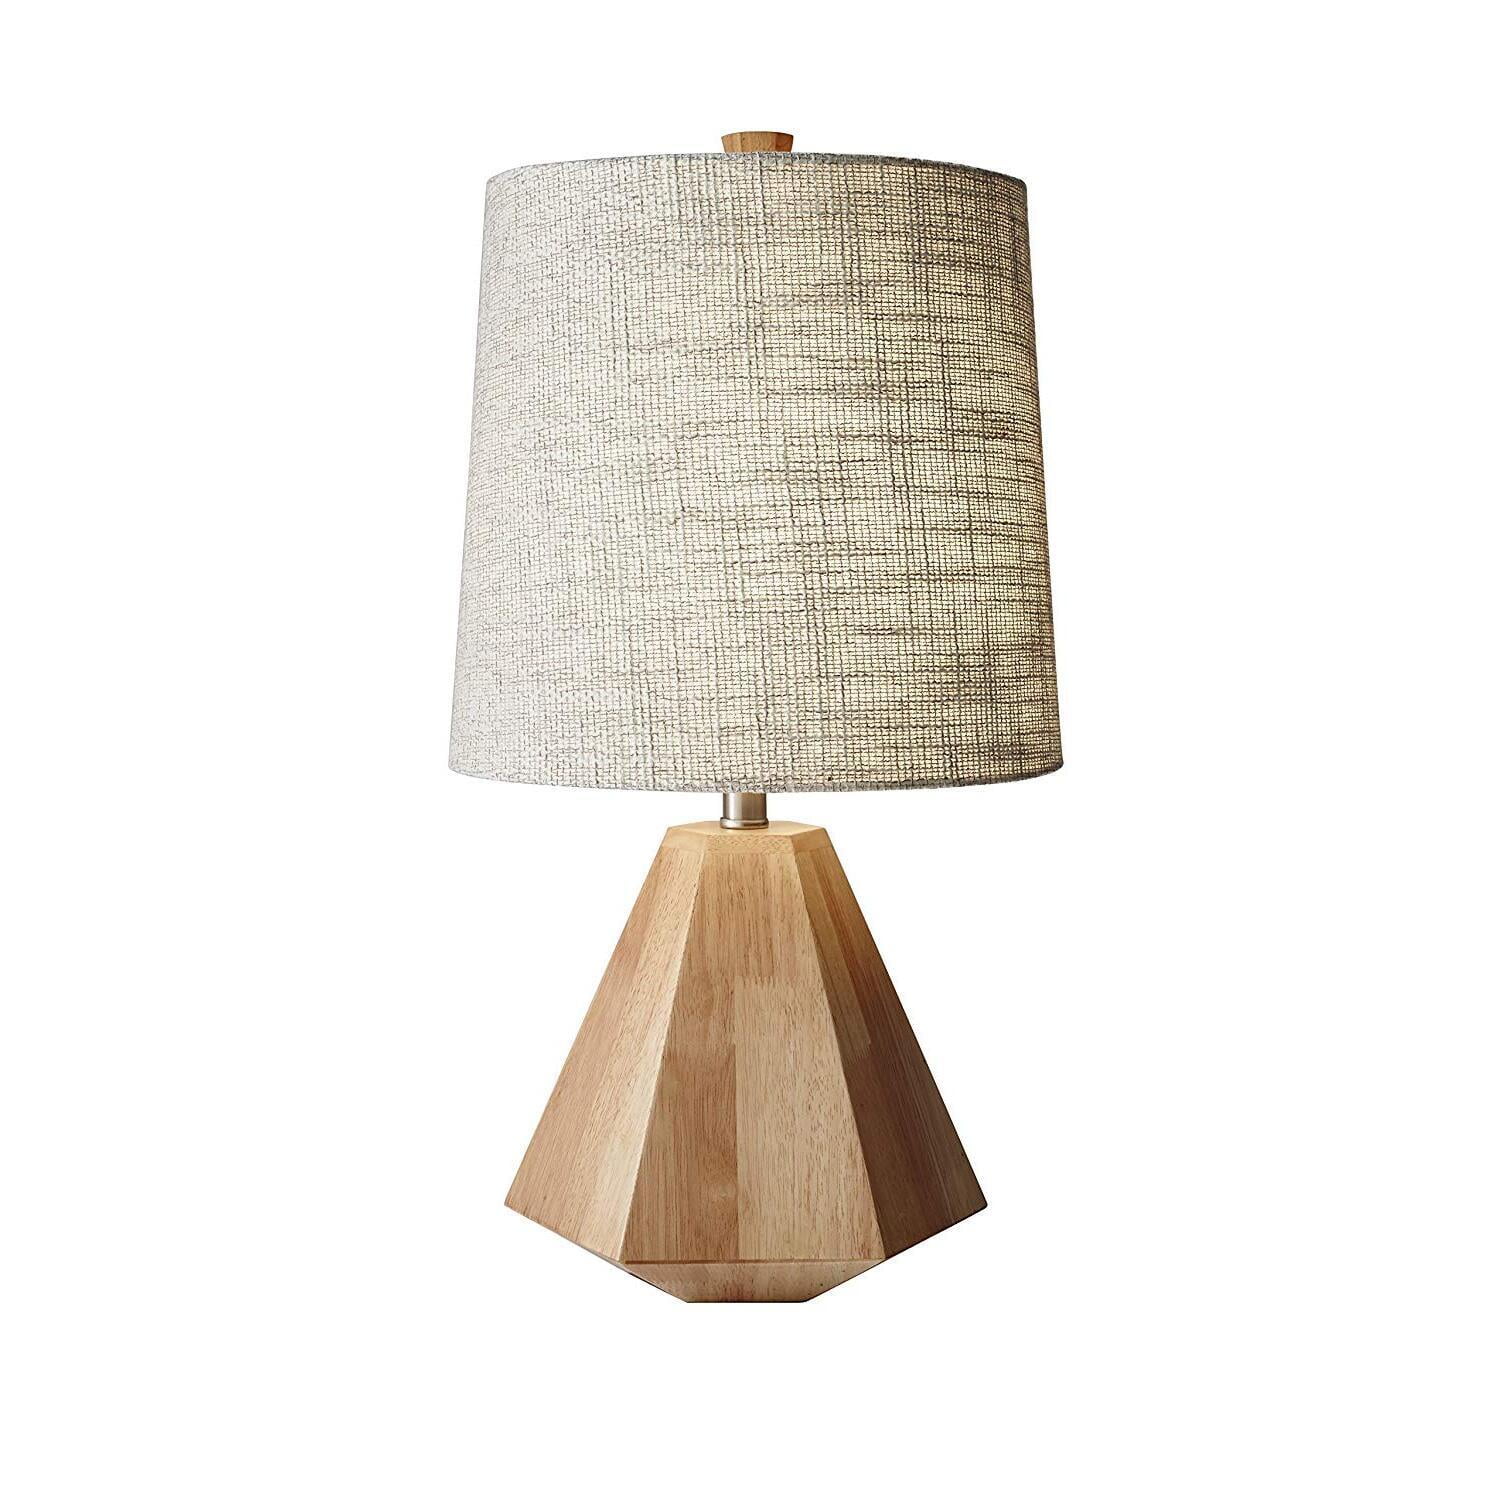 Adesso Grayson Table Lamp, Natural Birch Wood